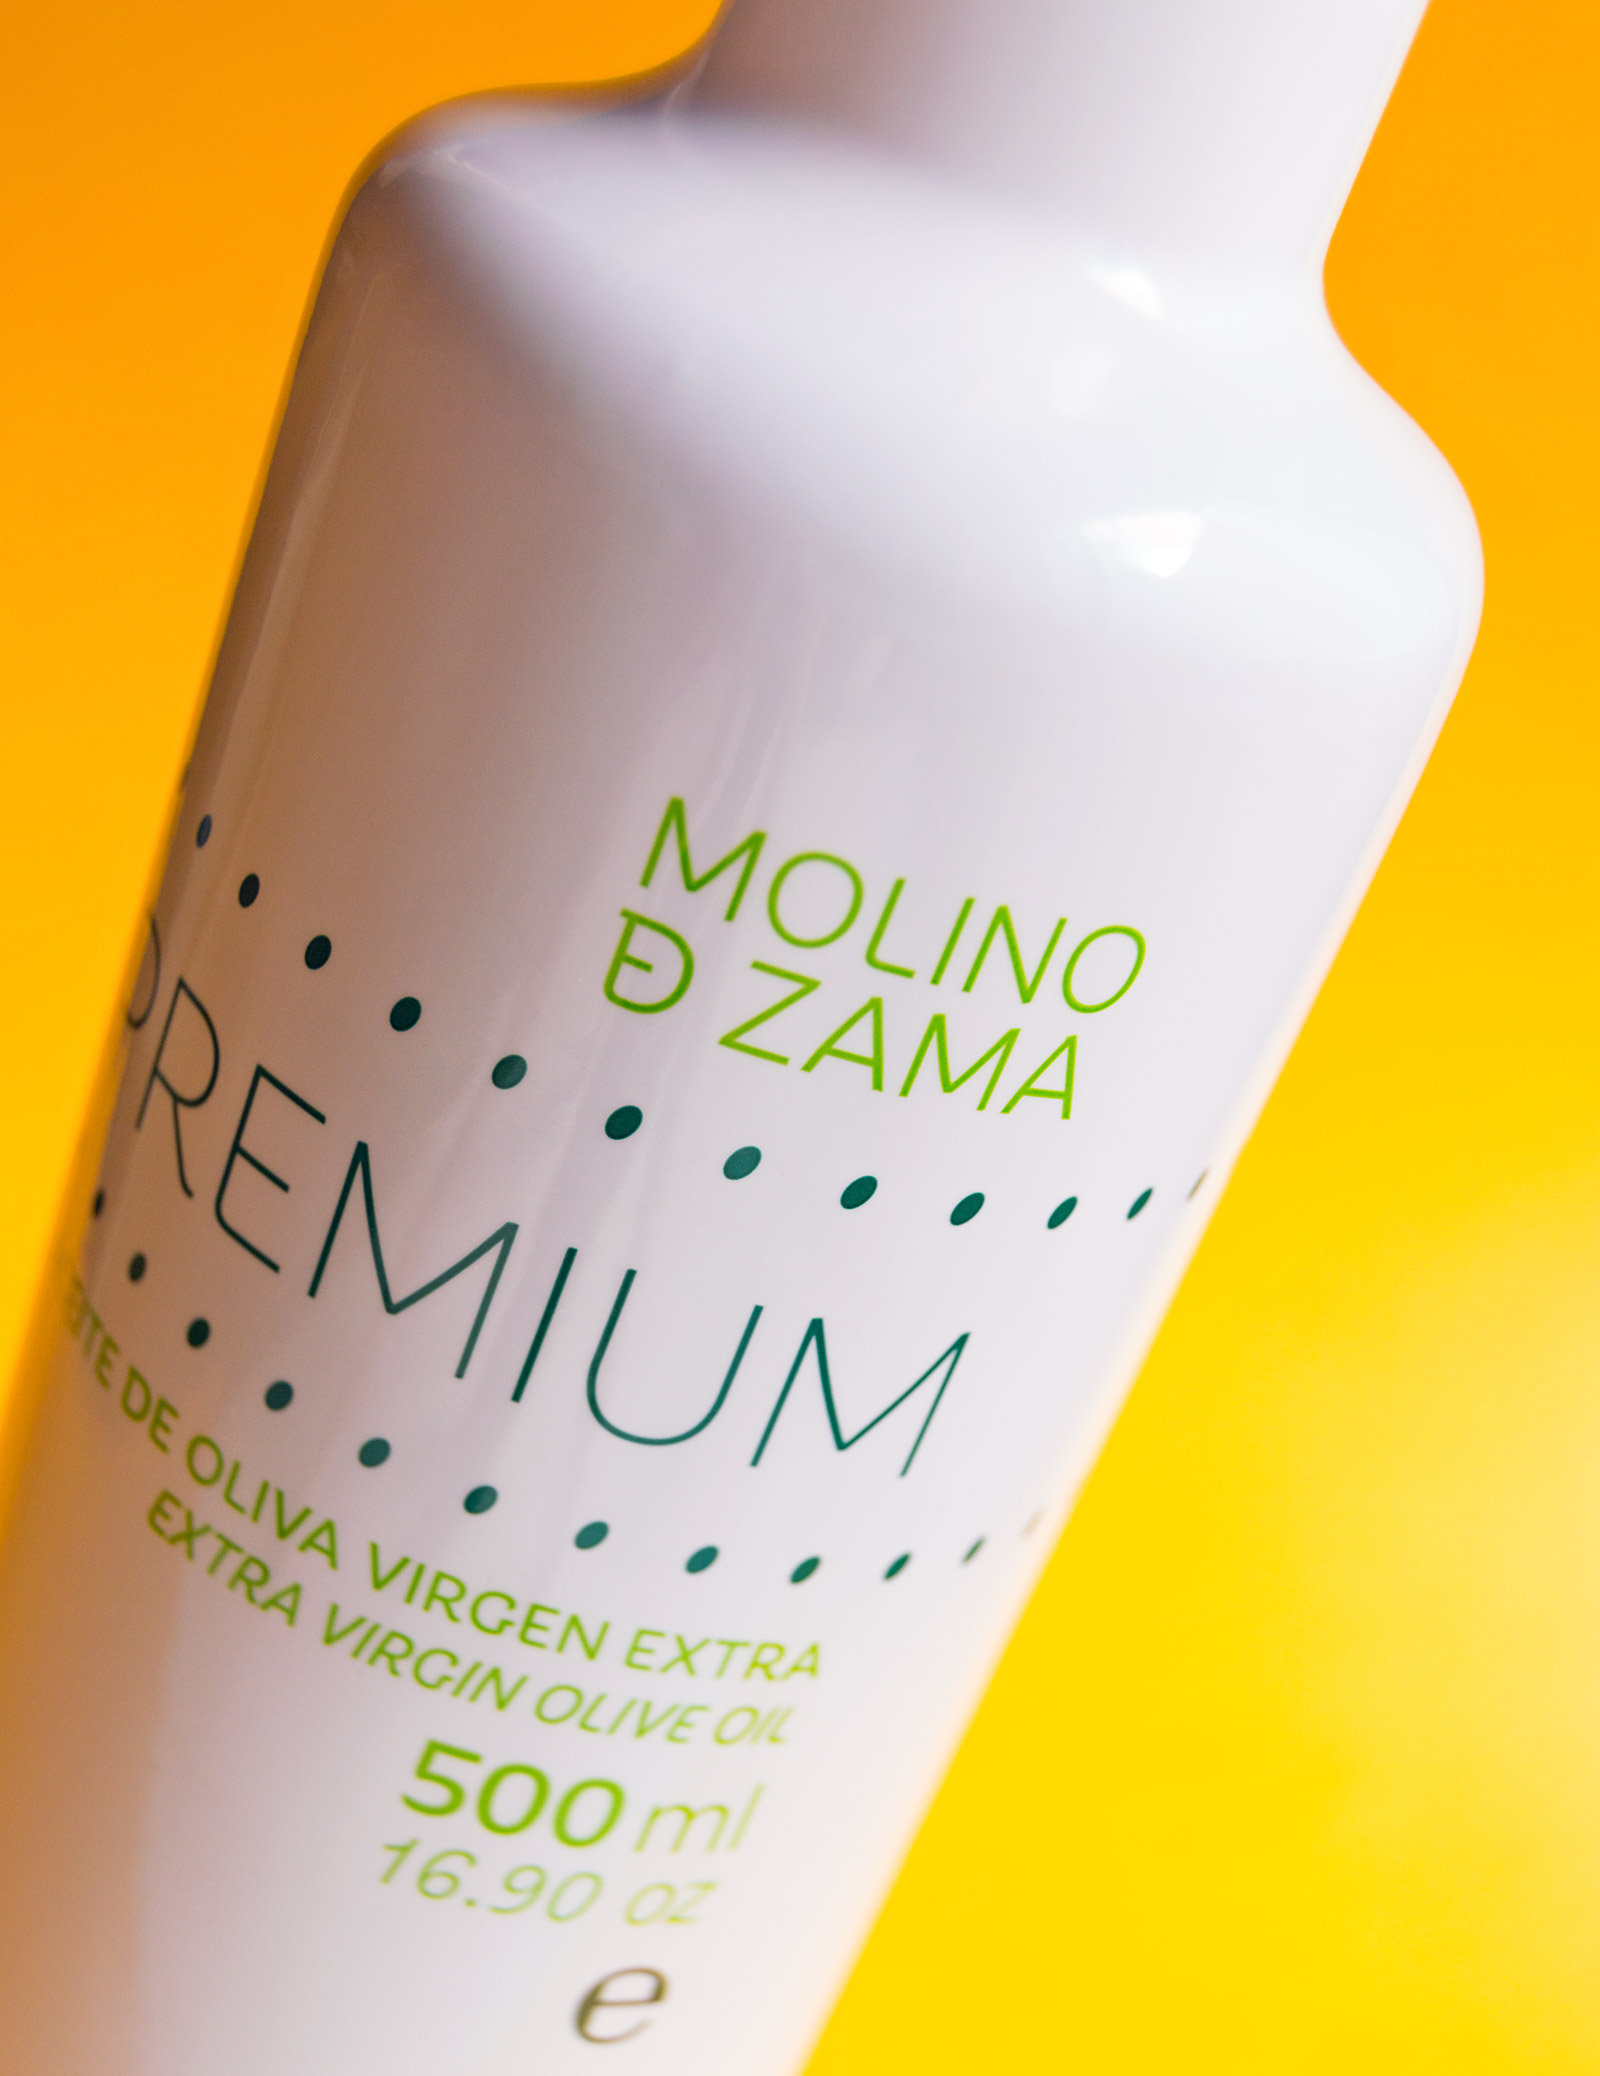 Aceite Molino de Zama. Detalle etiqueta Premium